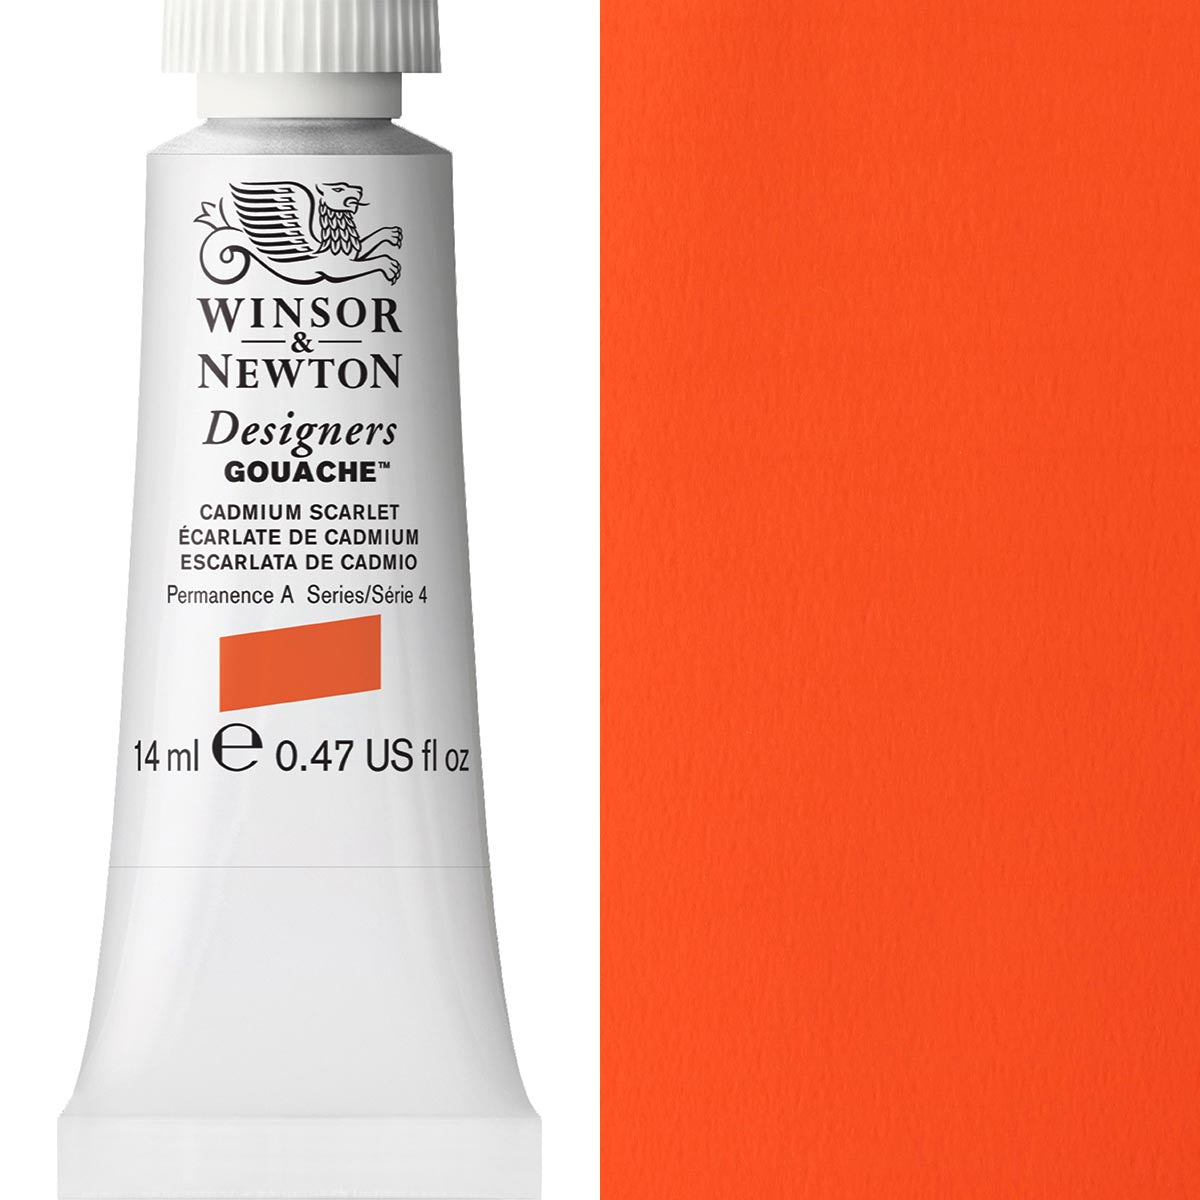 Winsor and Newton - Designers Gouache - 14ml - Cadmium Scarlet